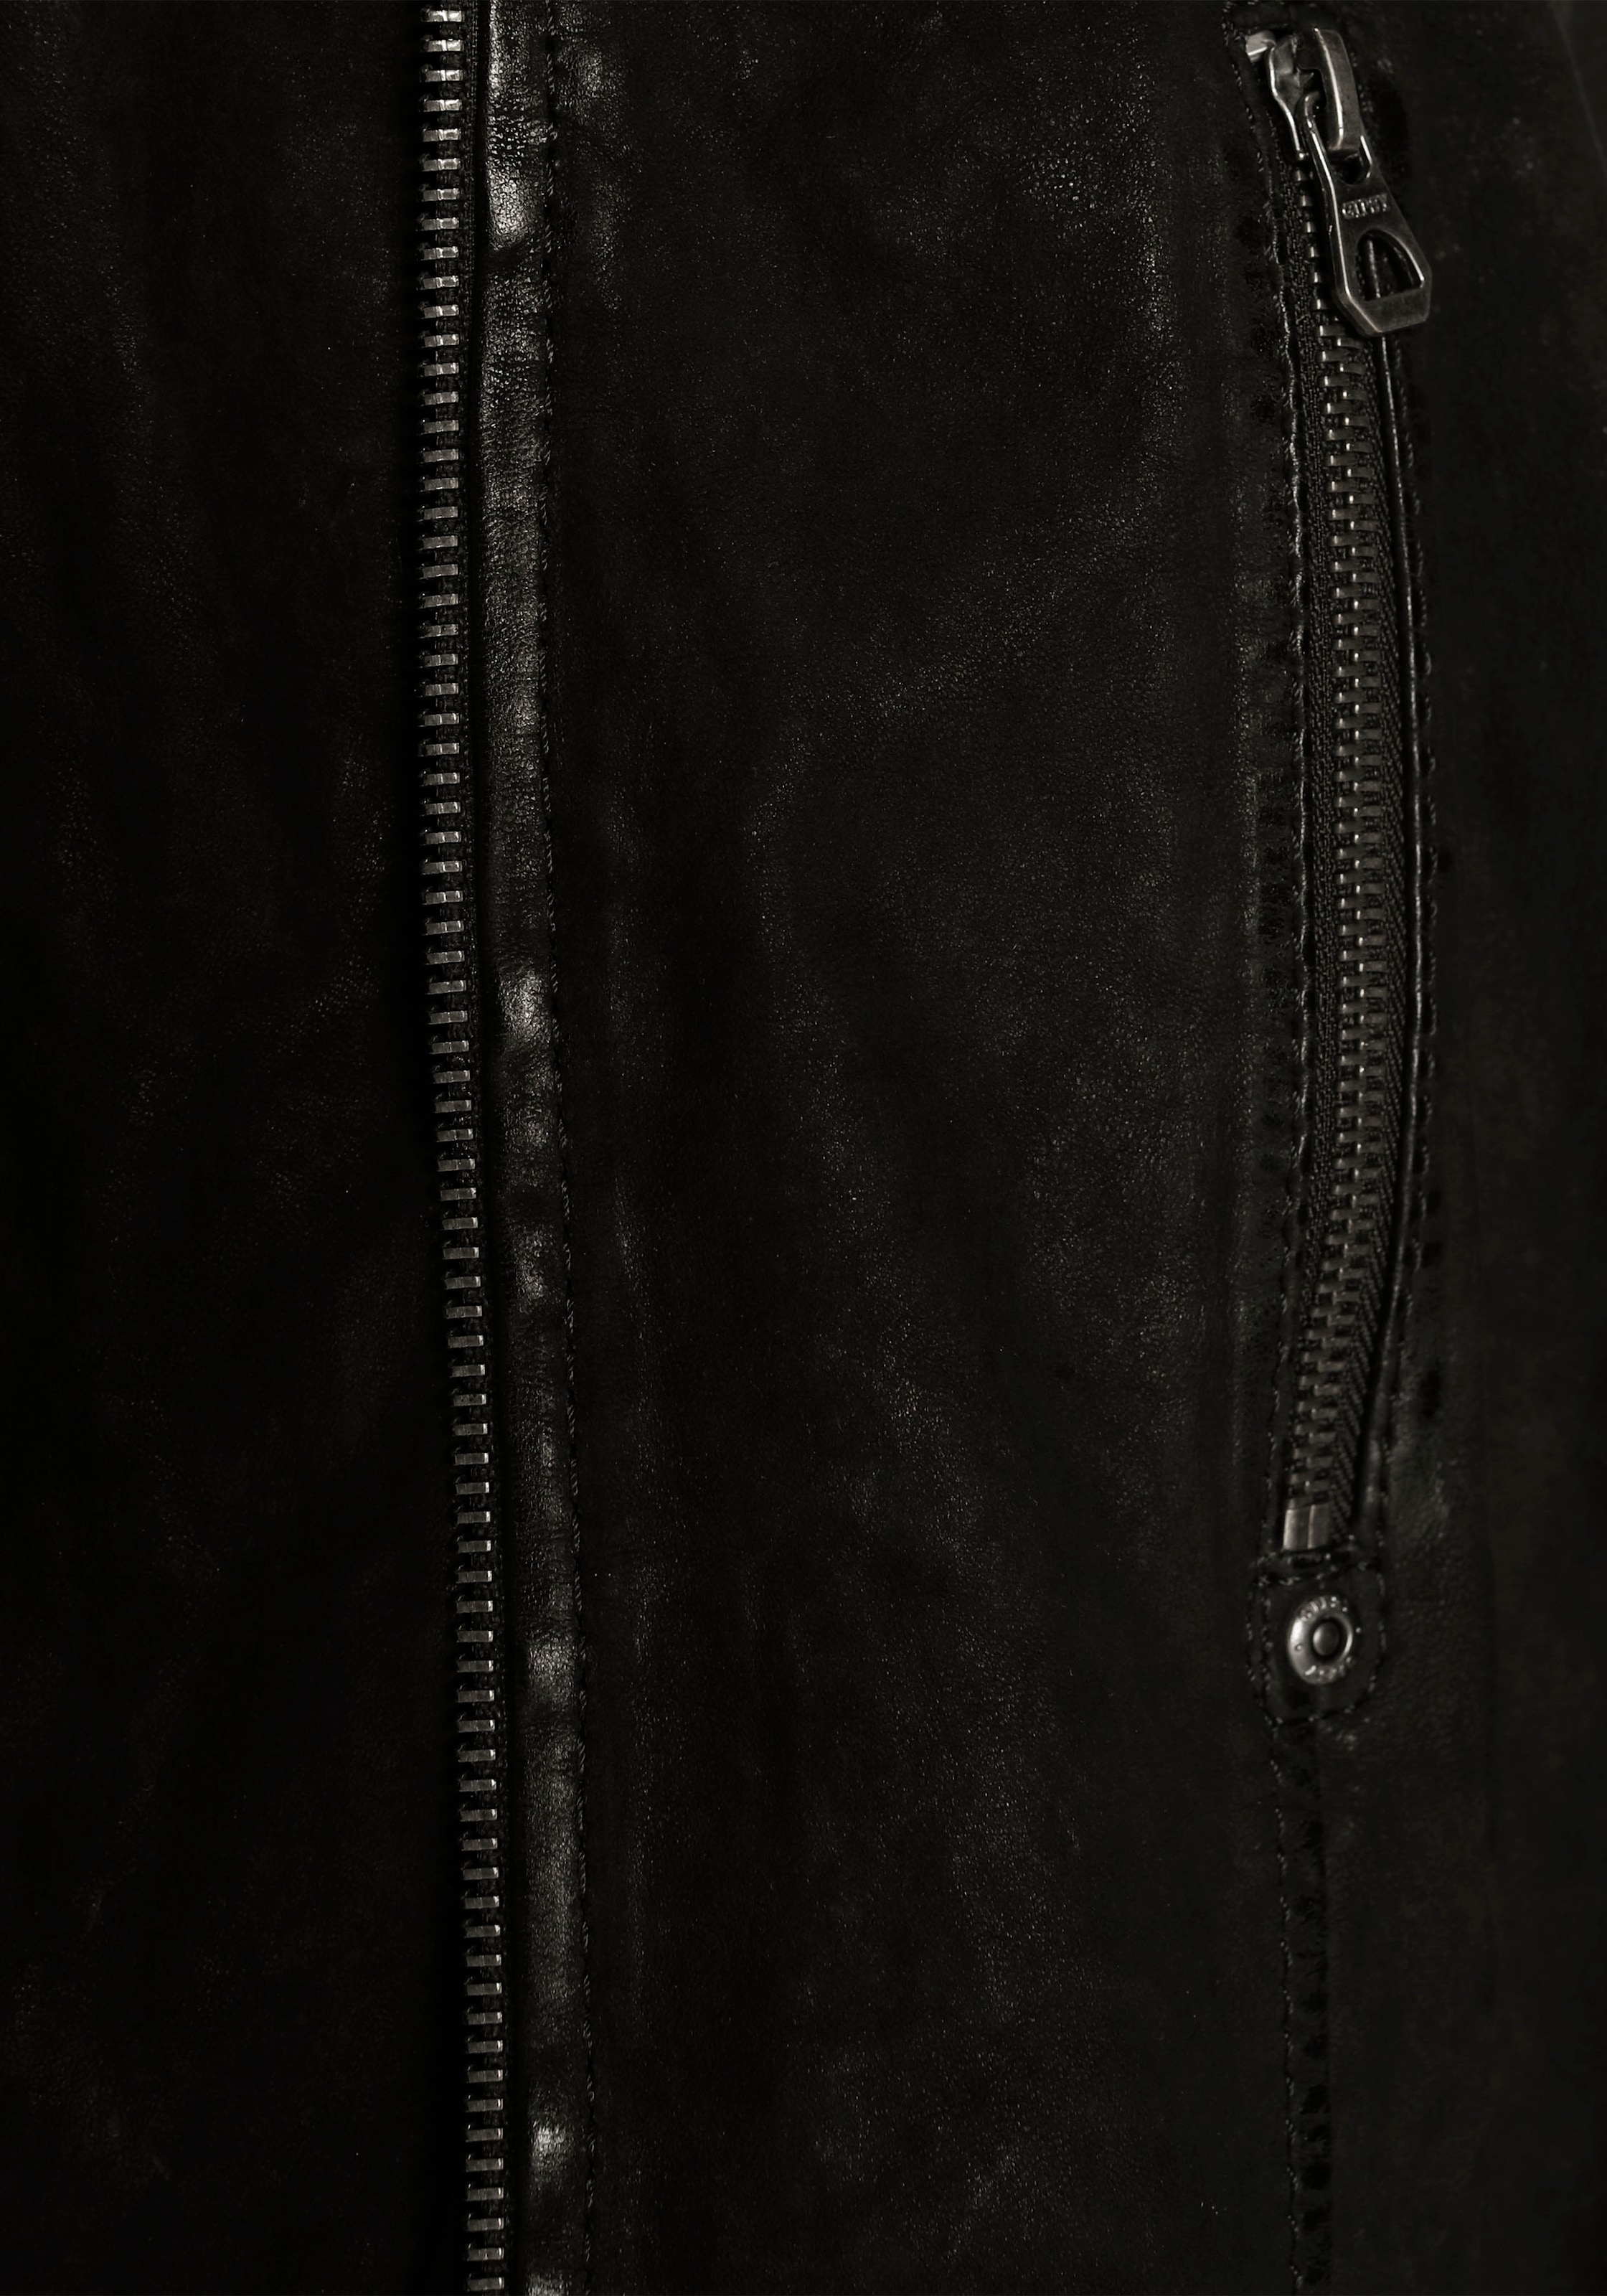 Gipsy Lederjacke »CYARA«, mit Kapuze, Lederjacke mit abnehmbarem Kapuzen-Inlay aus Jerseyqualität